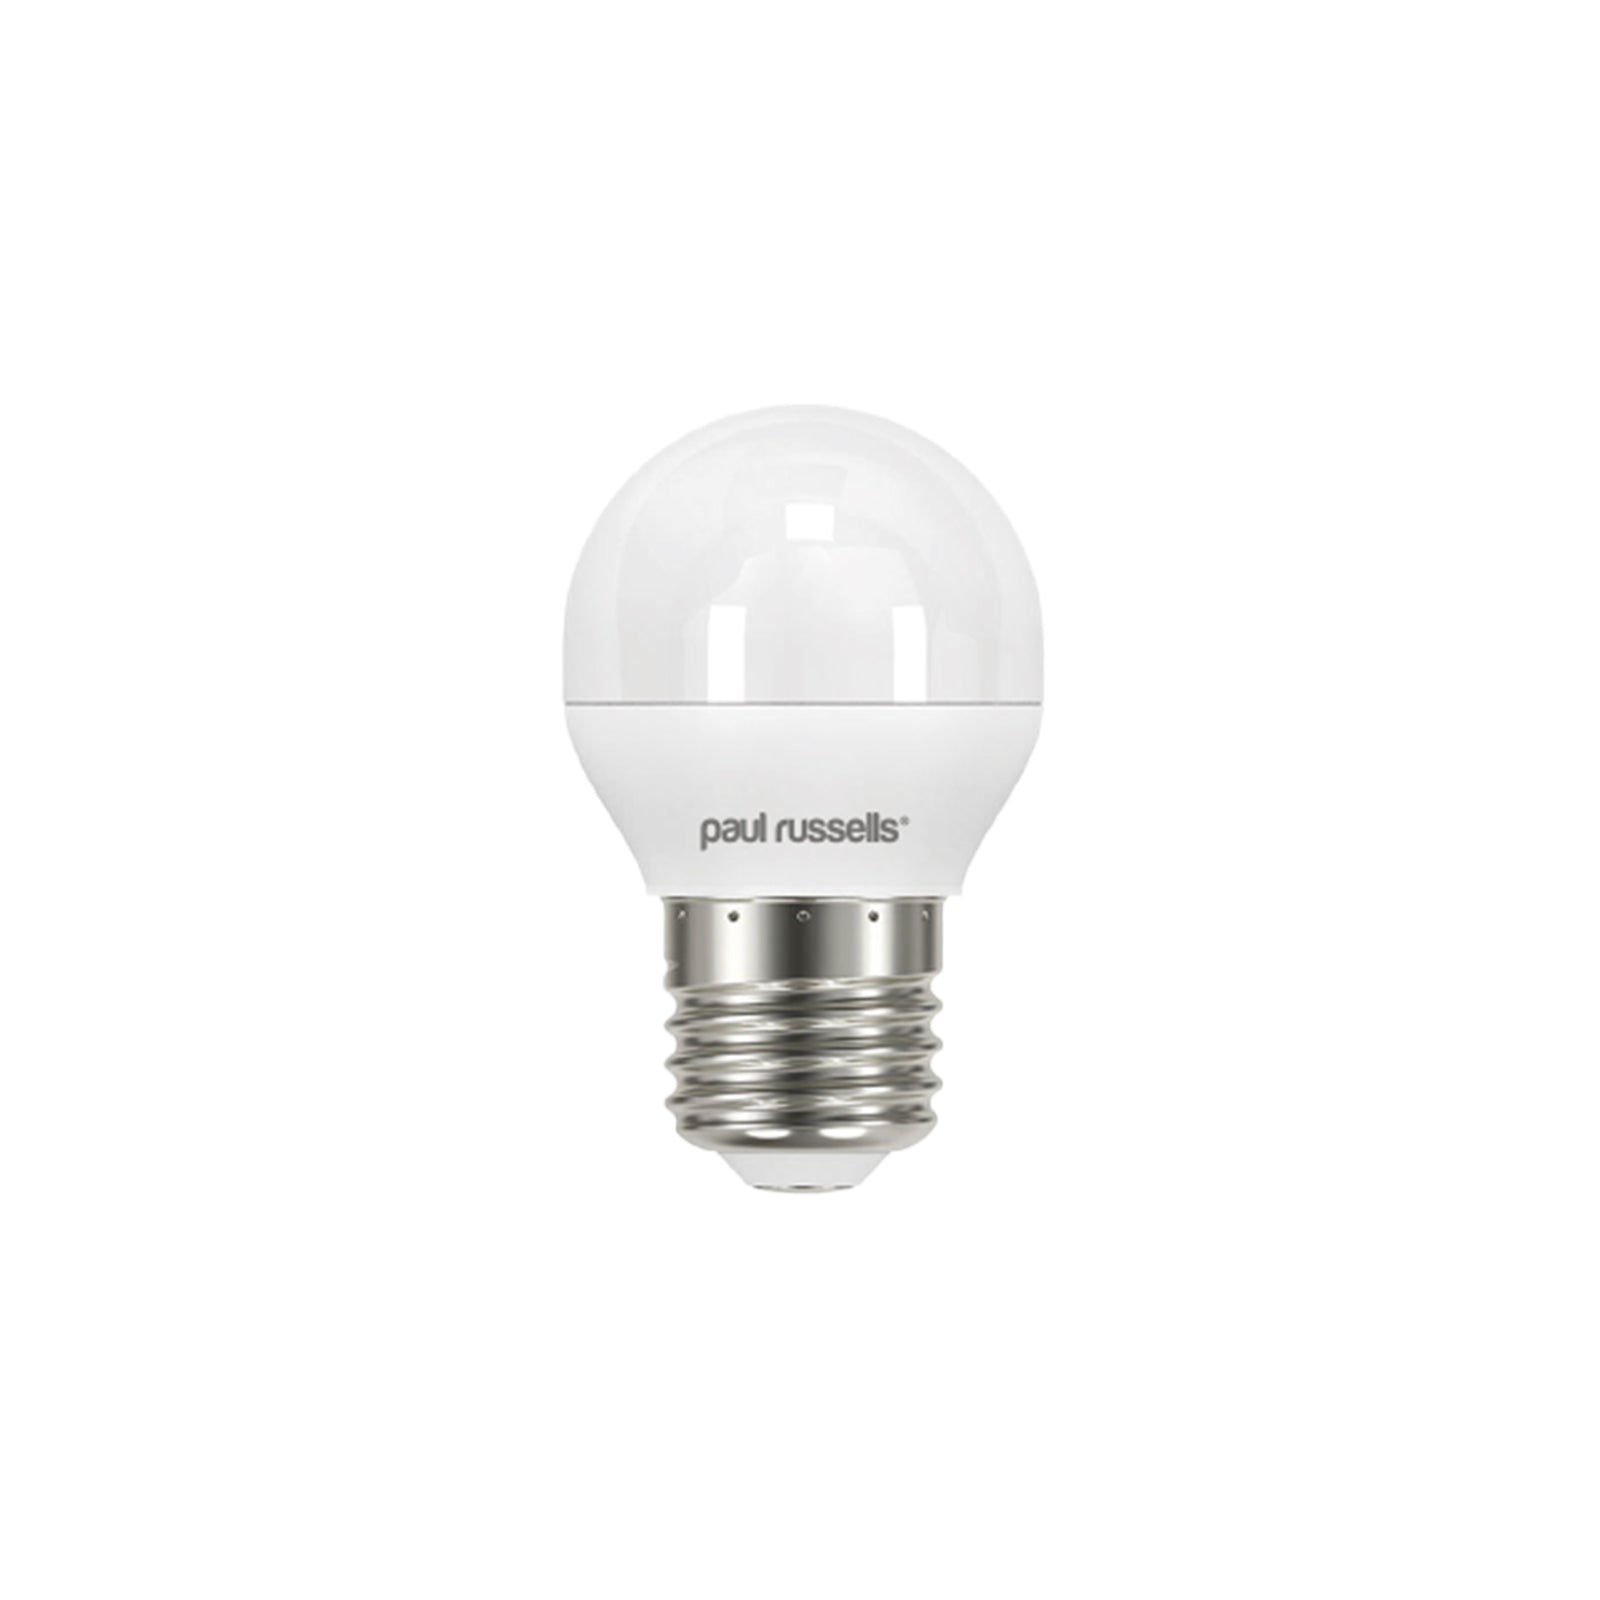 LED Golf Ball 4.9W=40W Cool White Edison Screw ES E27 Bulbs